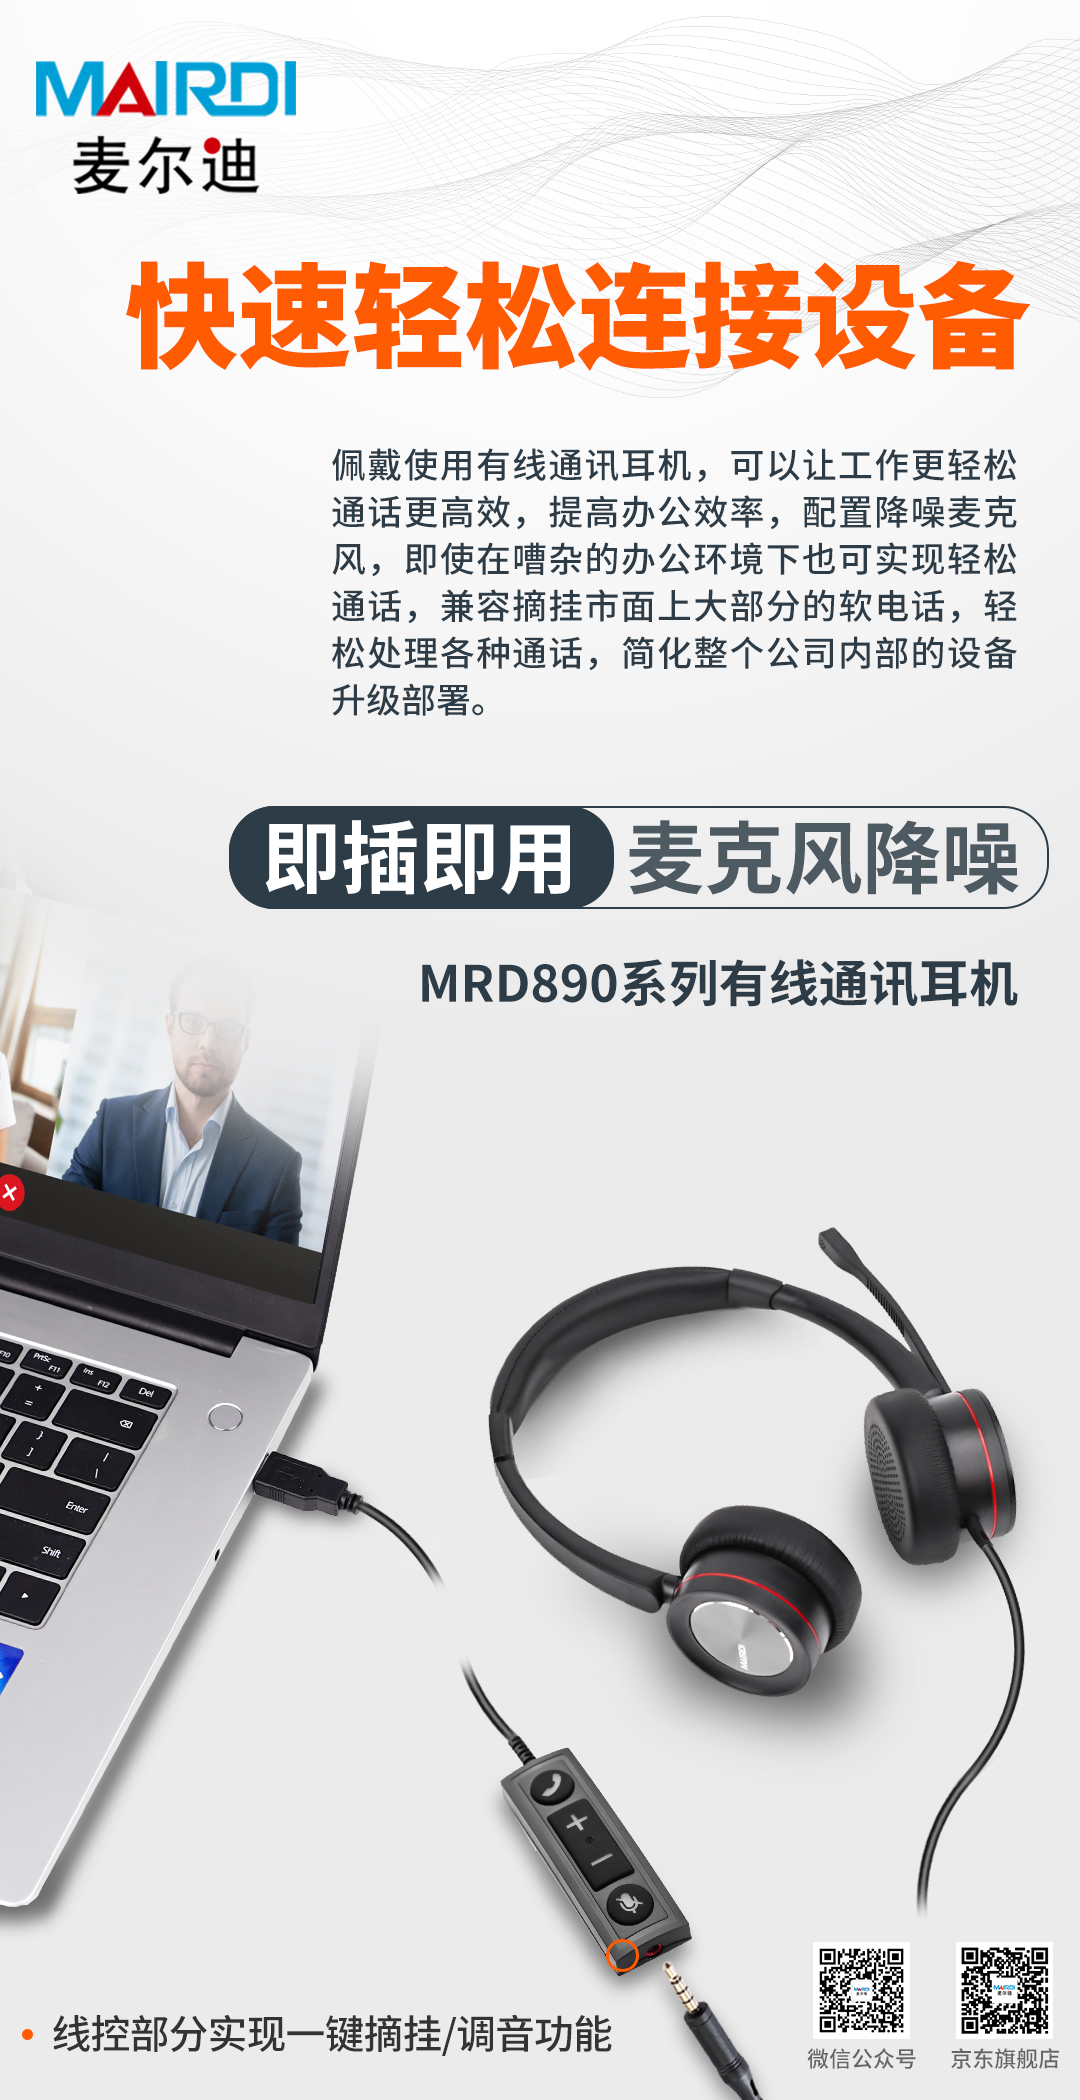 MRD890DNC双耳通讯耳机宣传海报图2022.6.30.jpg